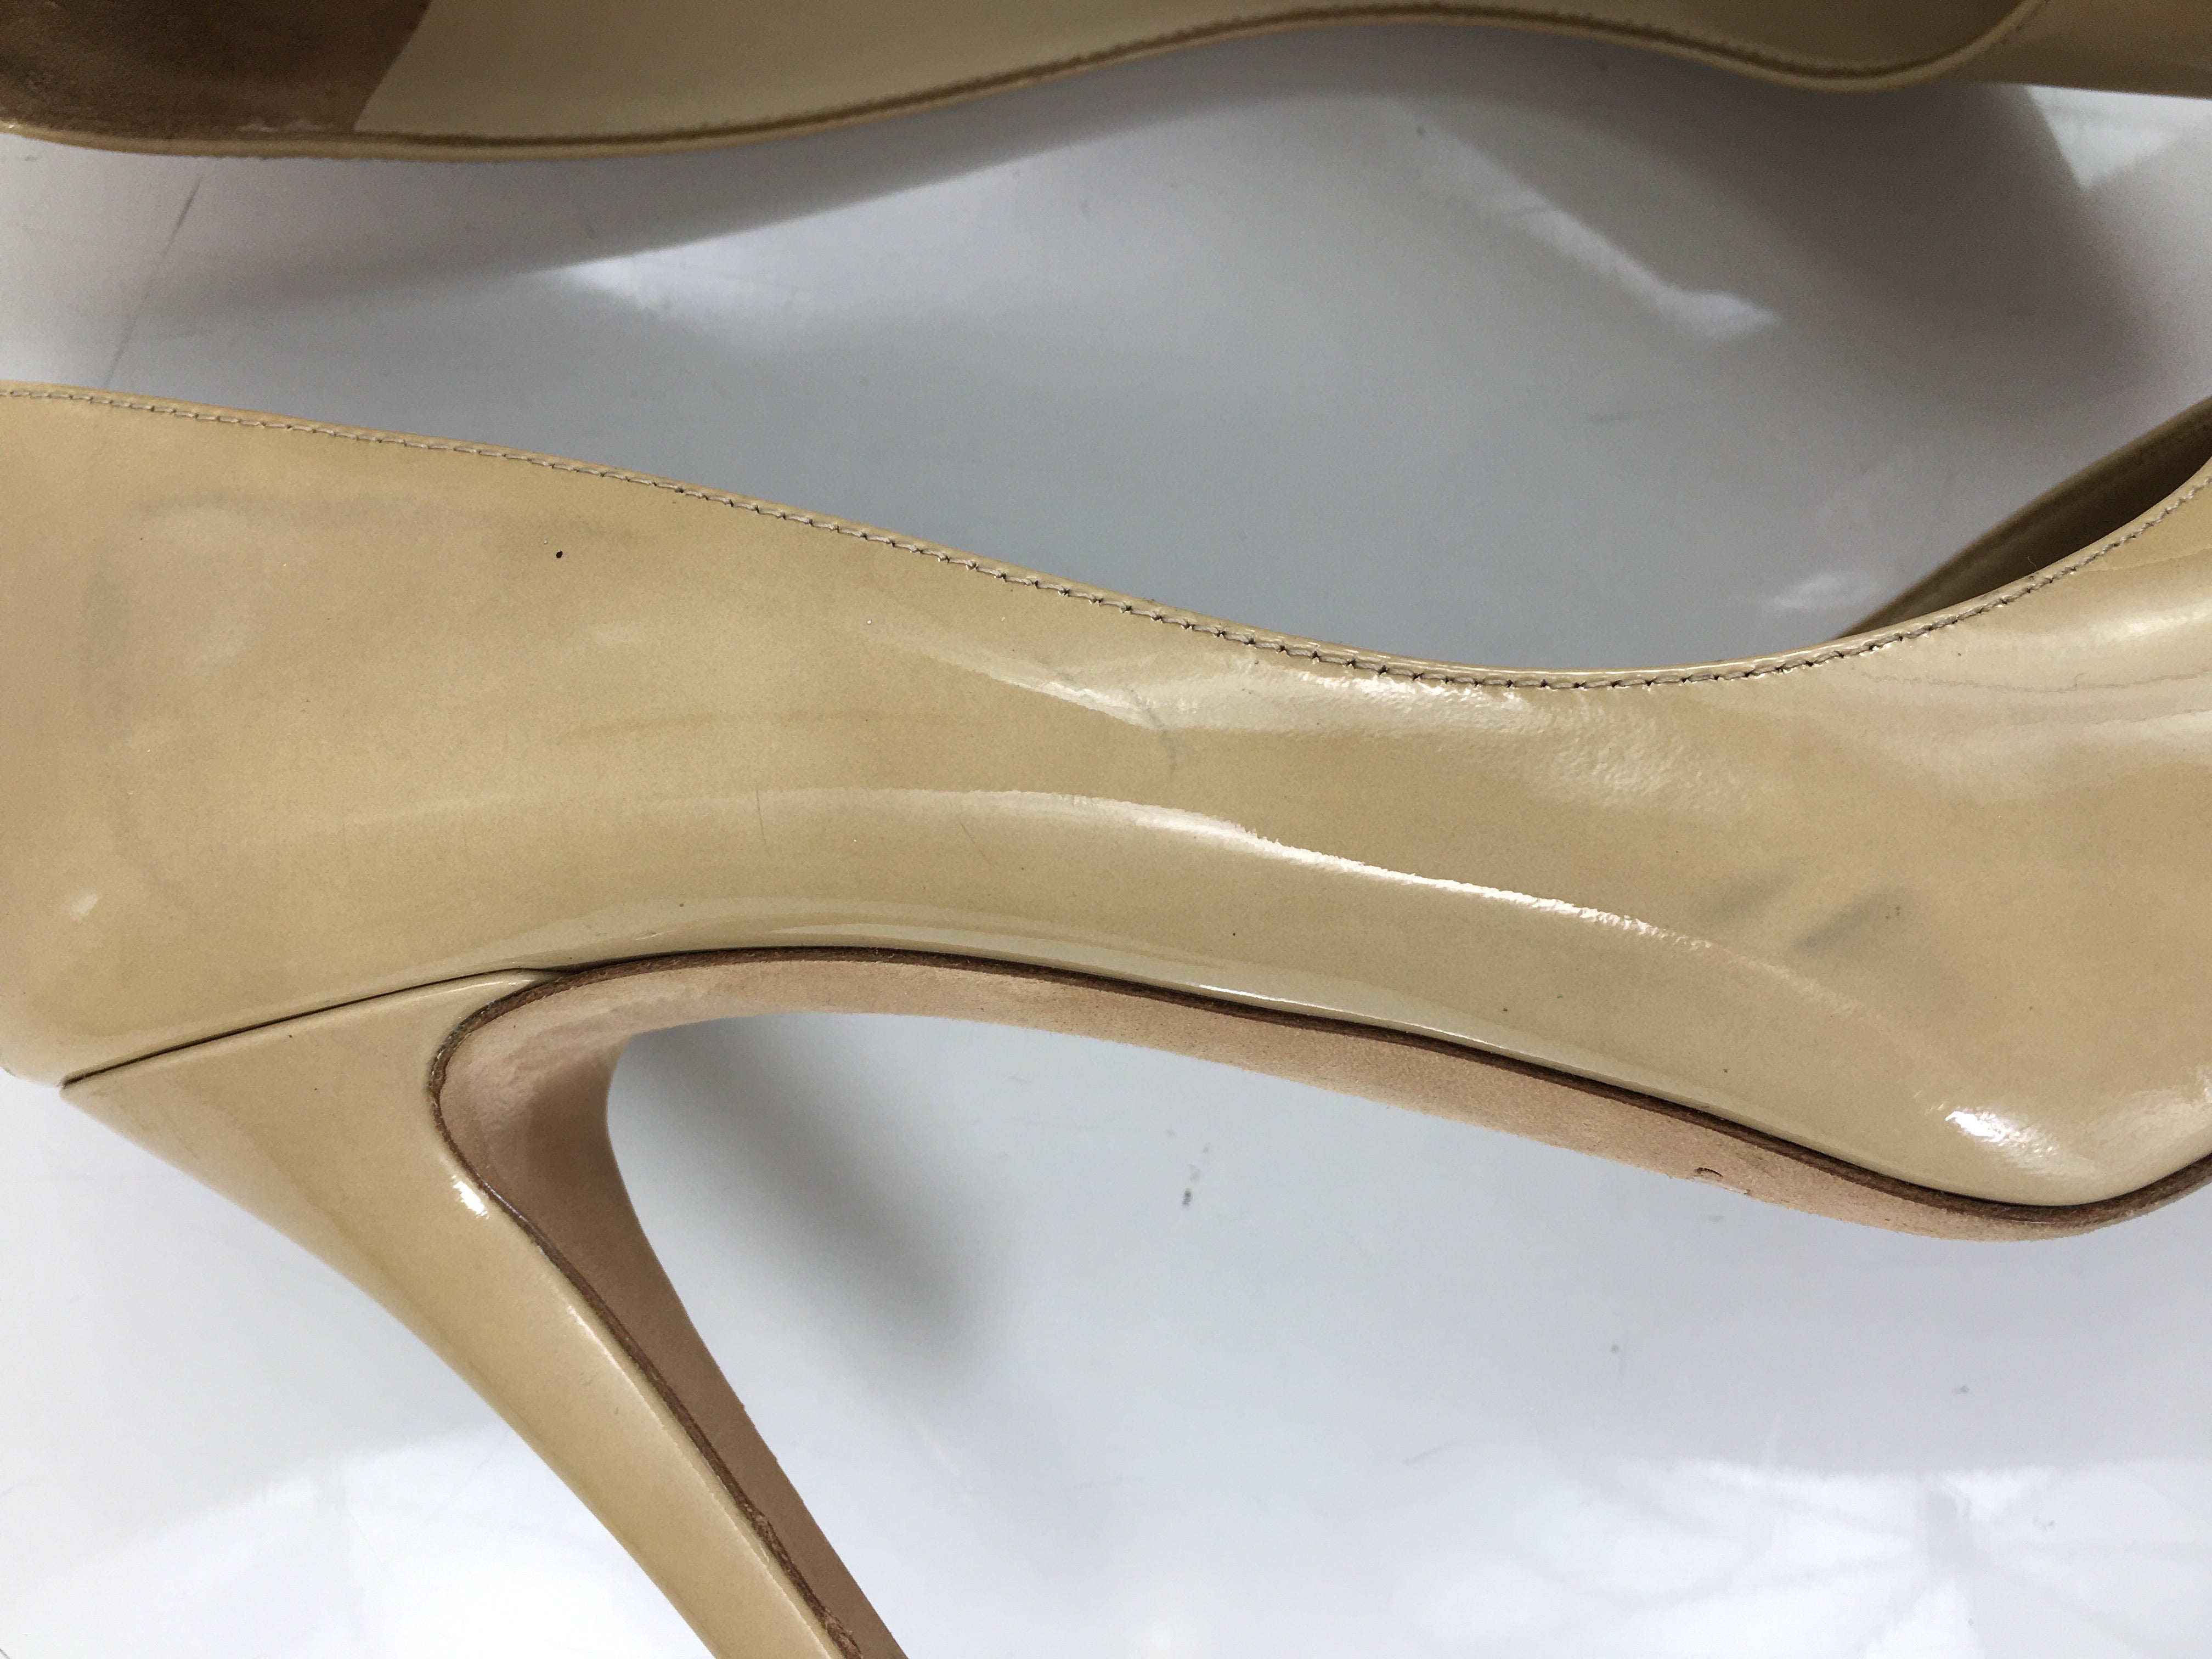 tan patent leather heels